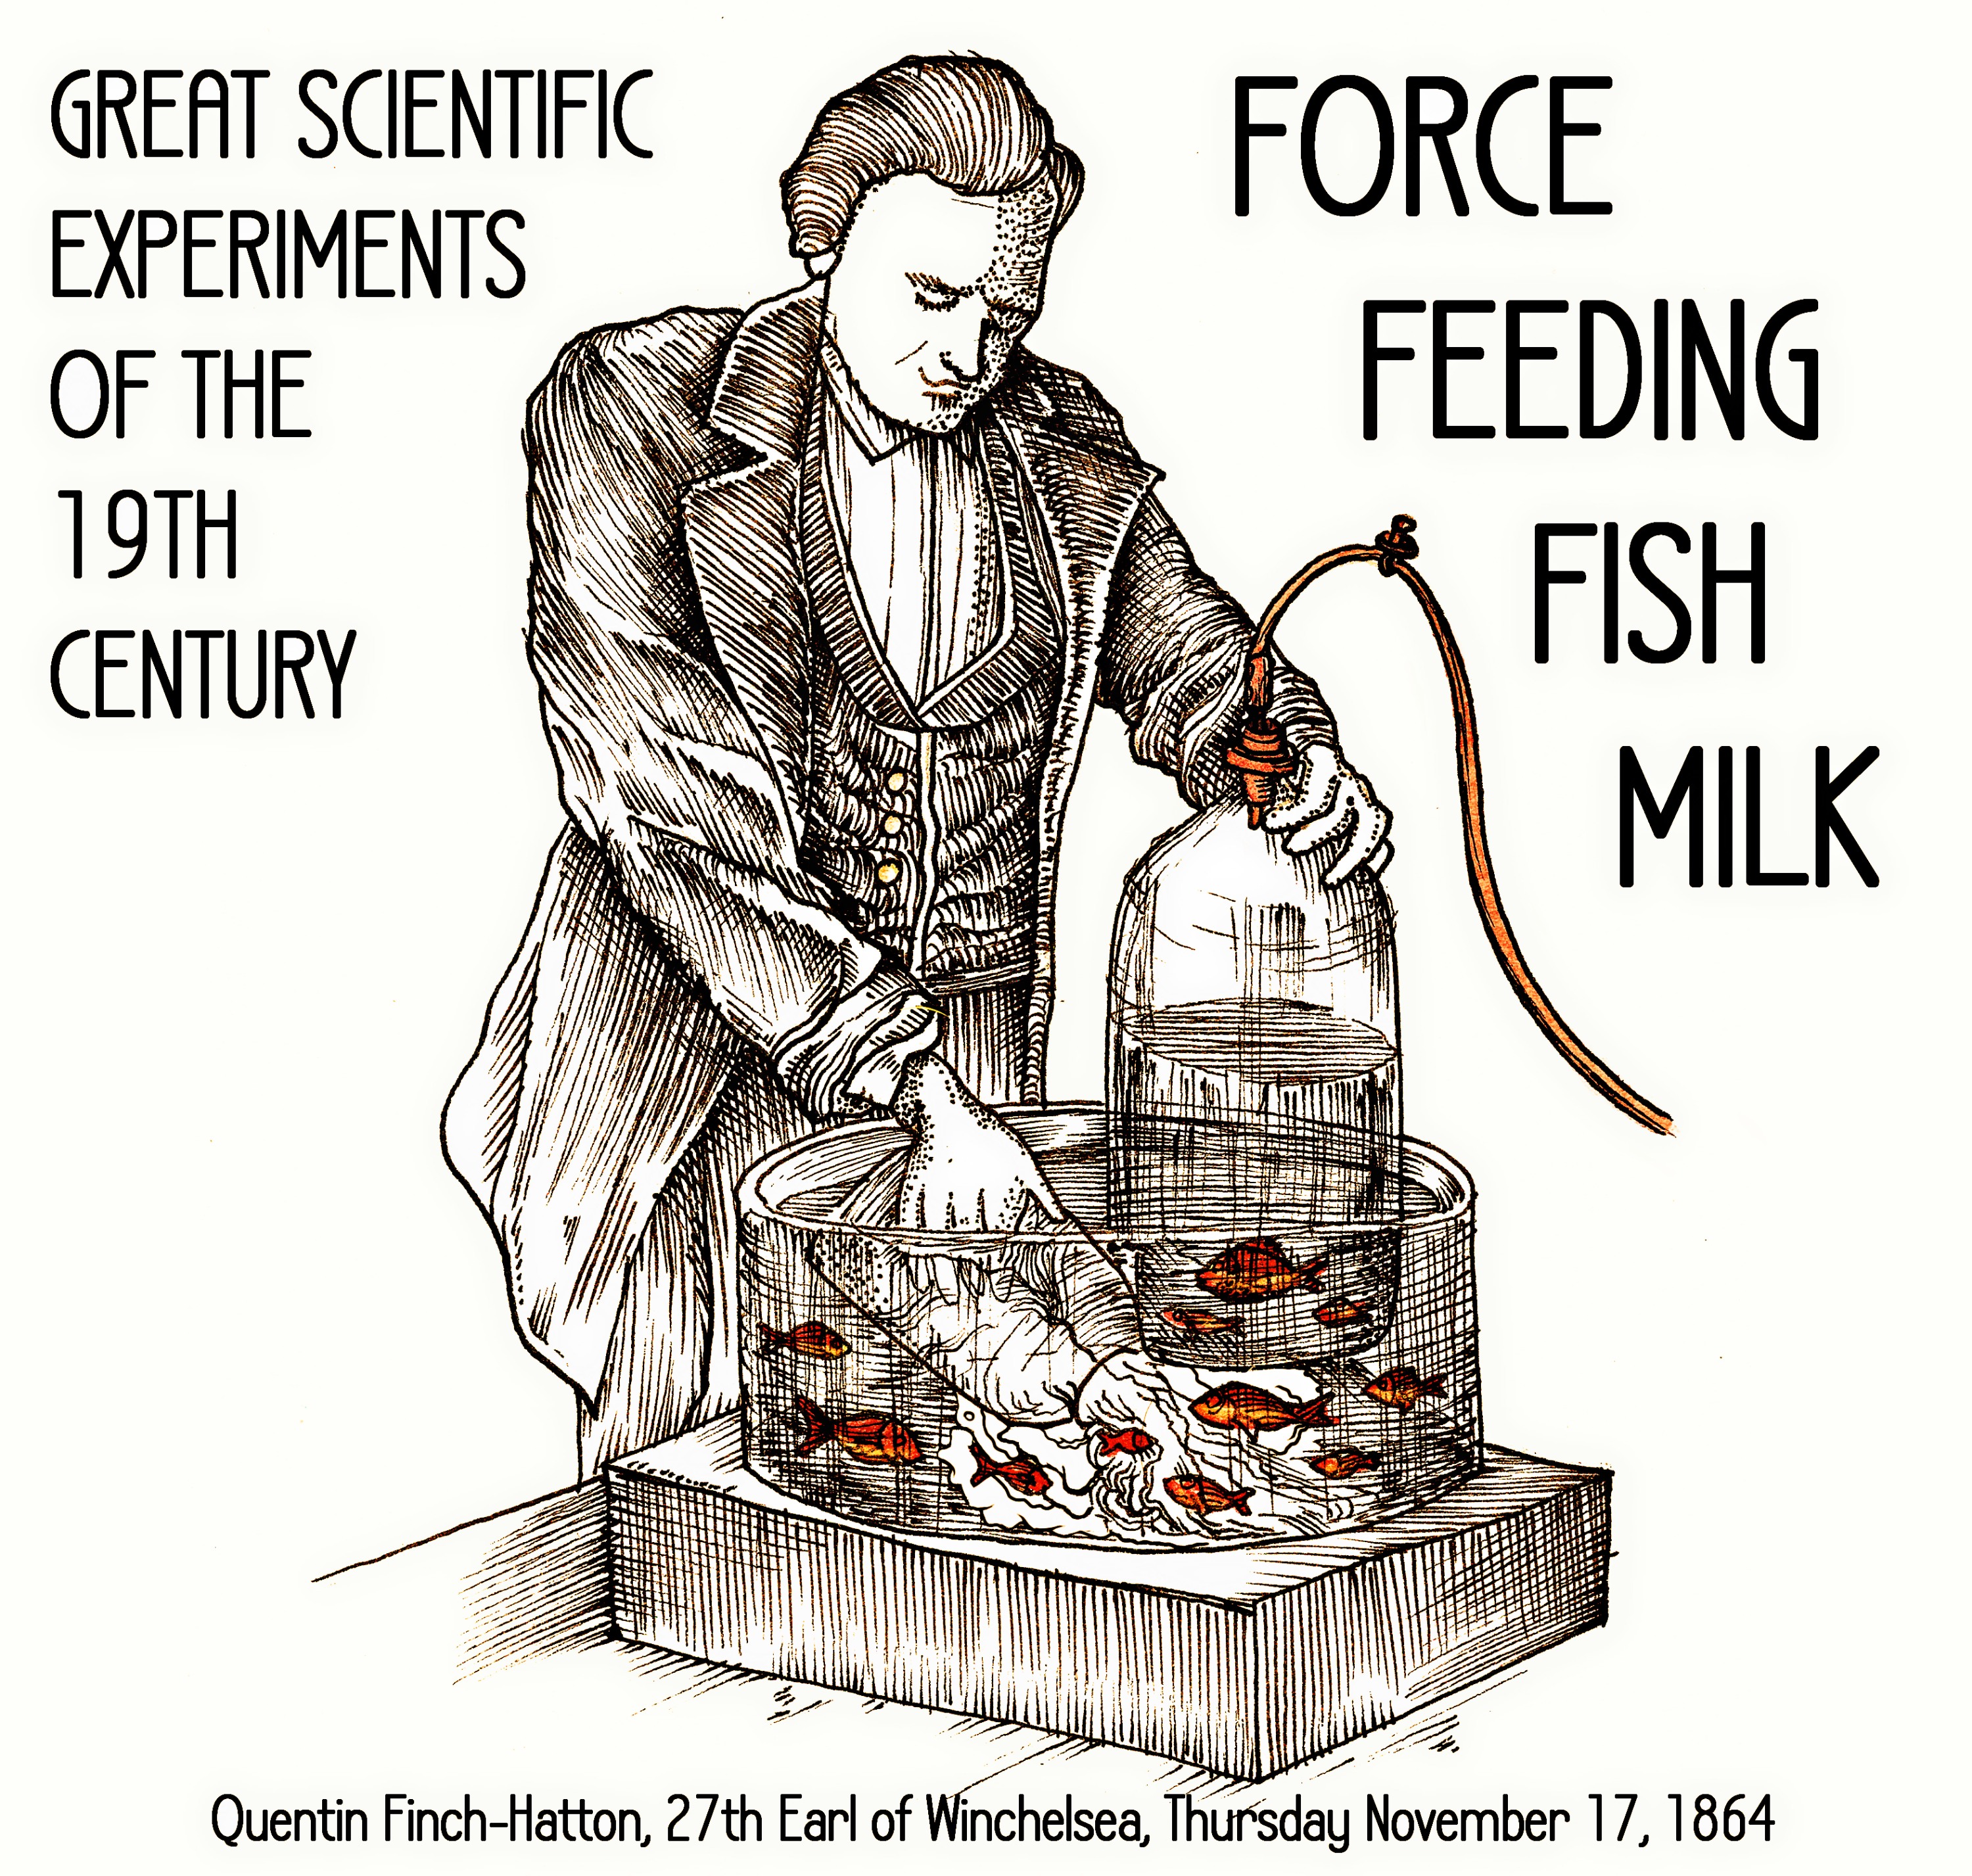 Great Scientific Experiments 1: Force Feeding Fish Milk